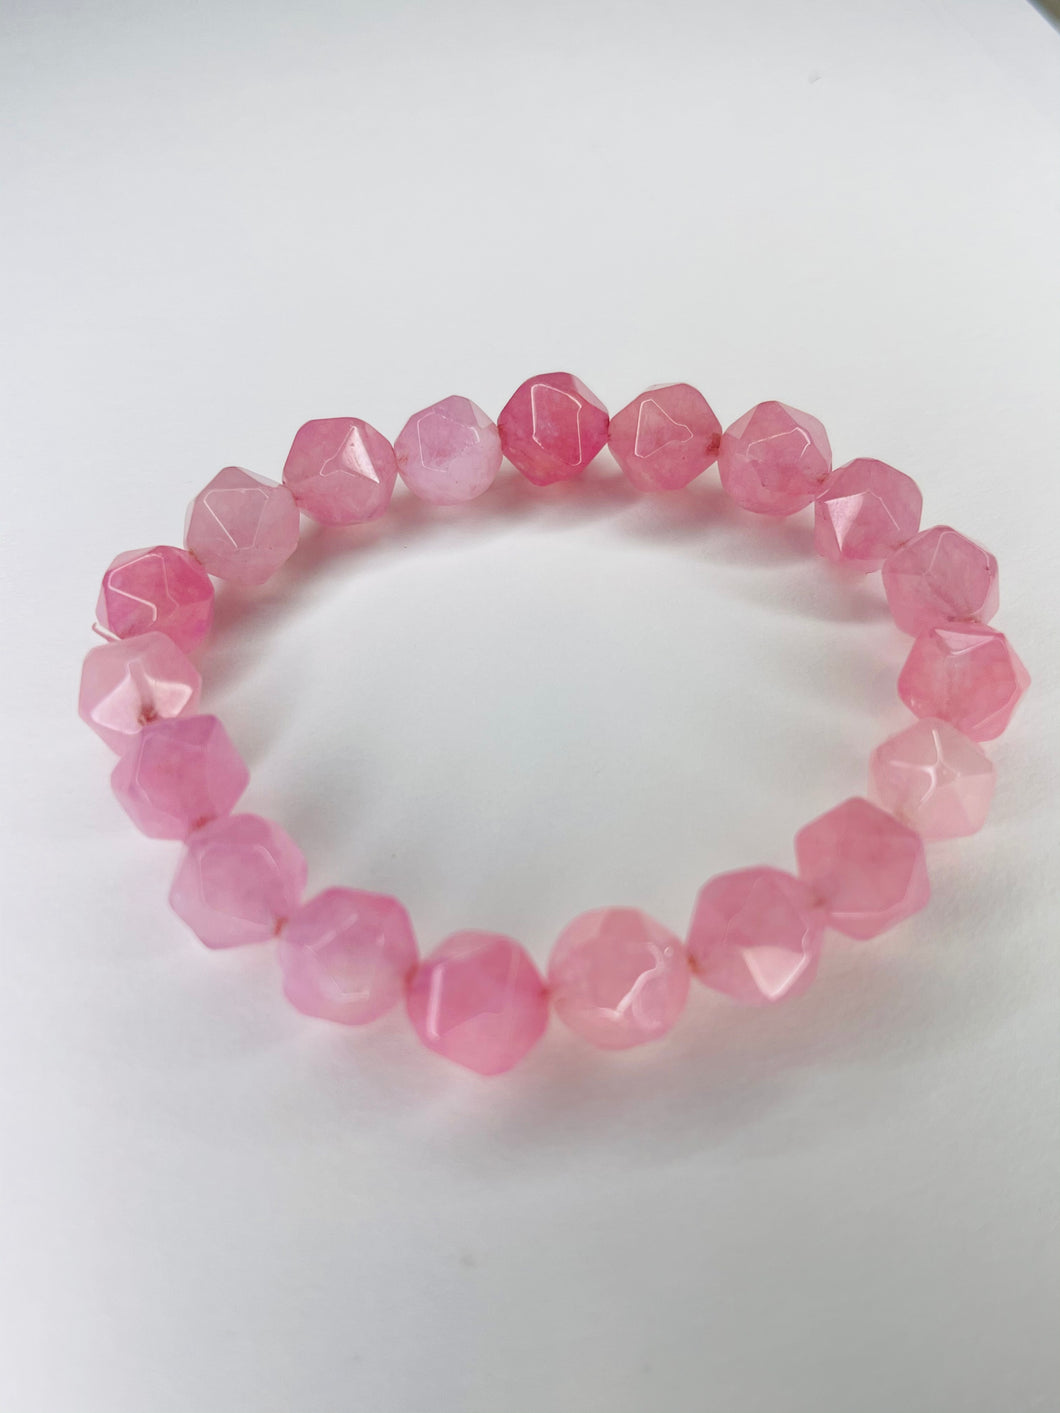 Rose Quartz “sacred geometry” bracelet